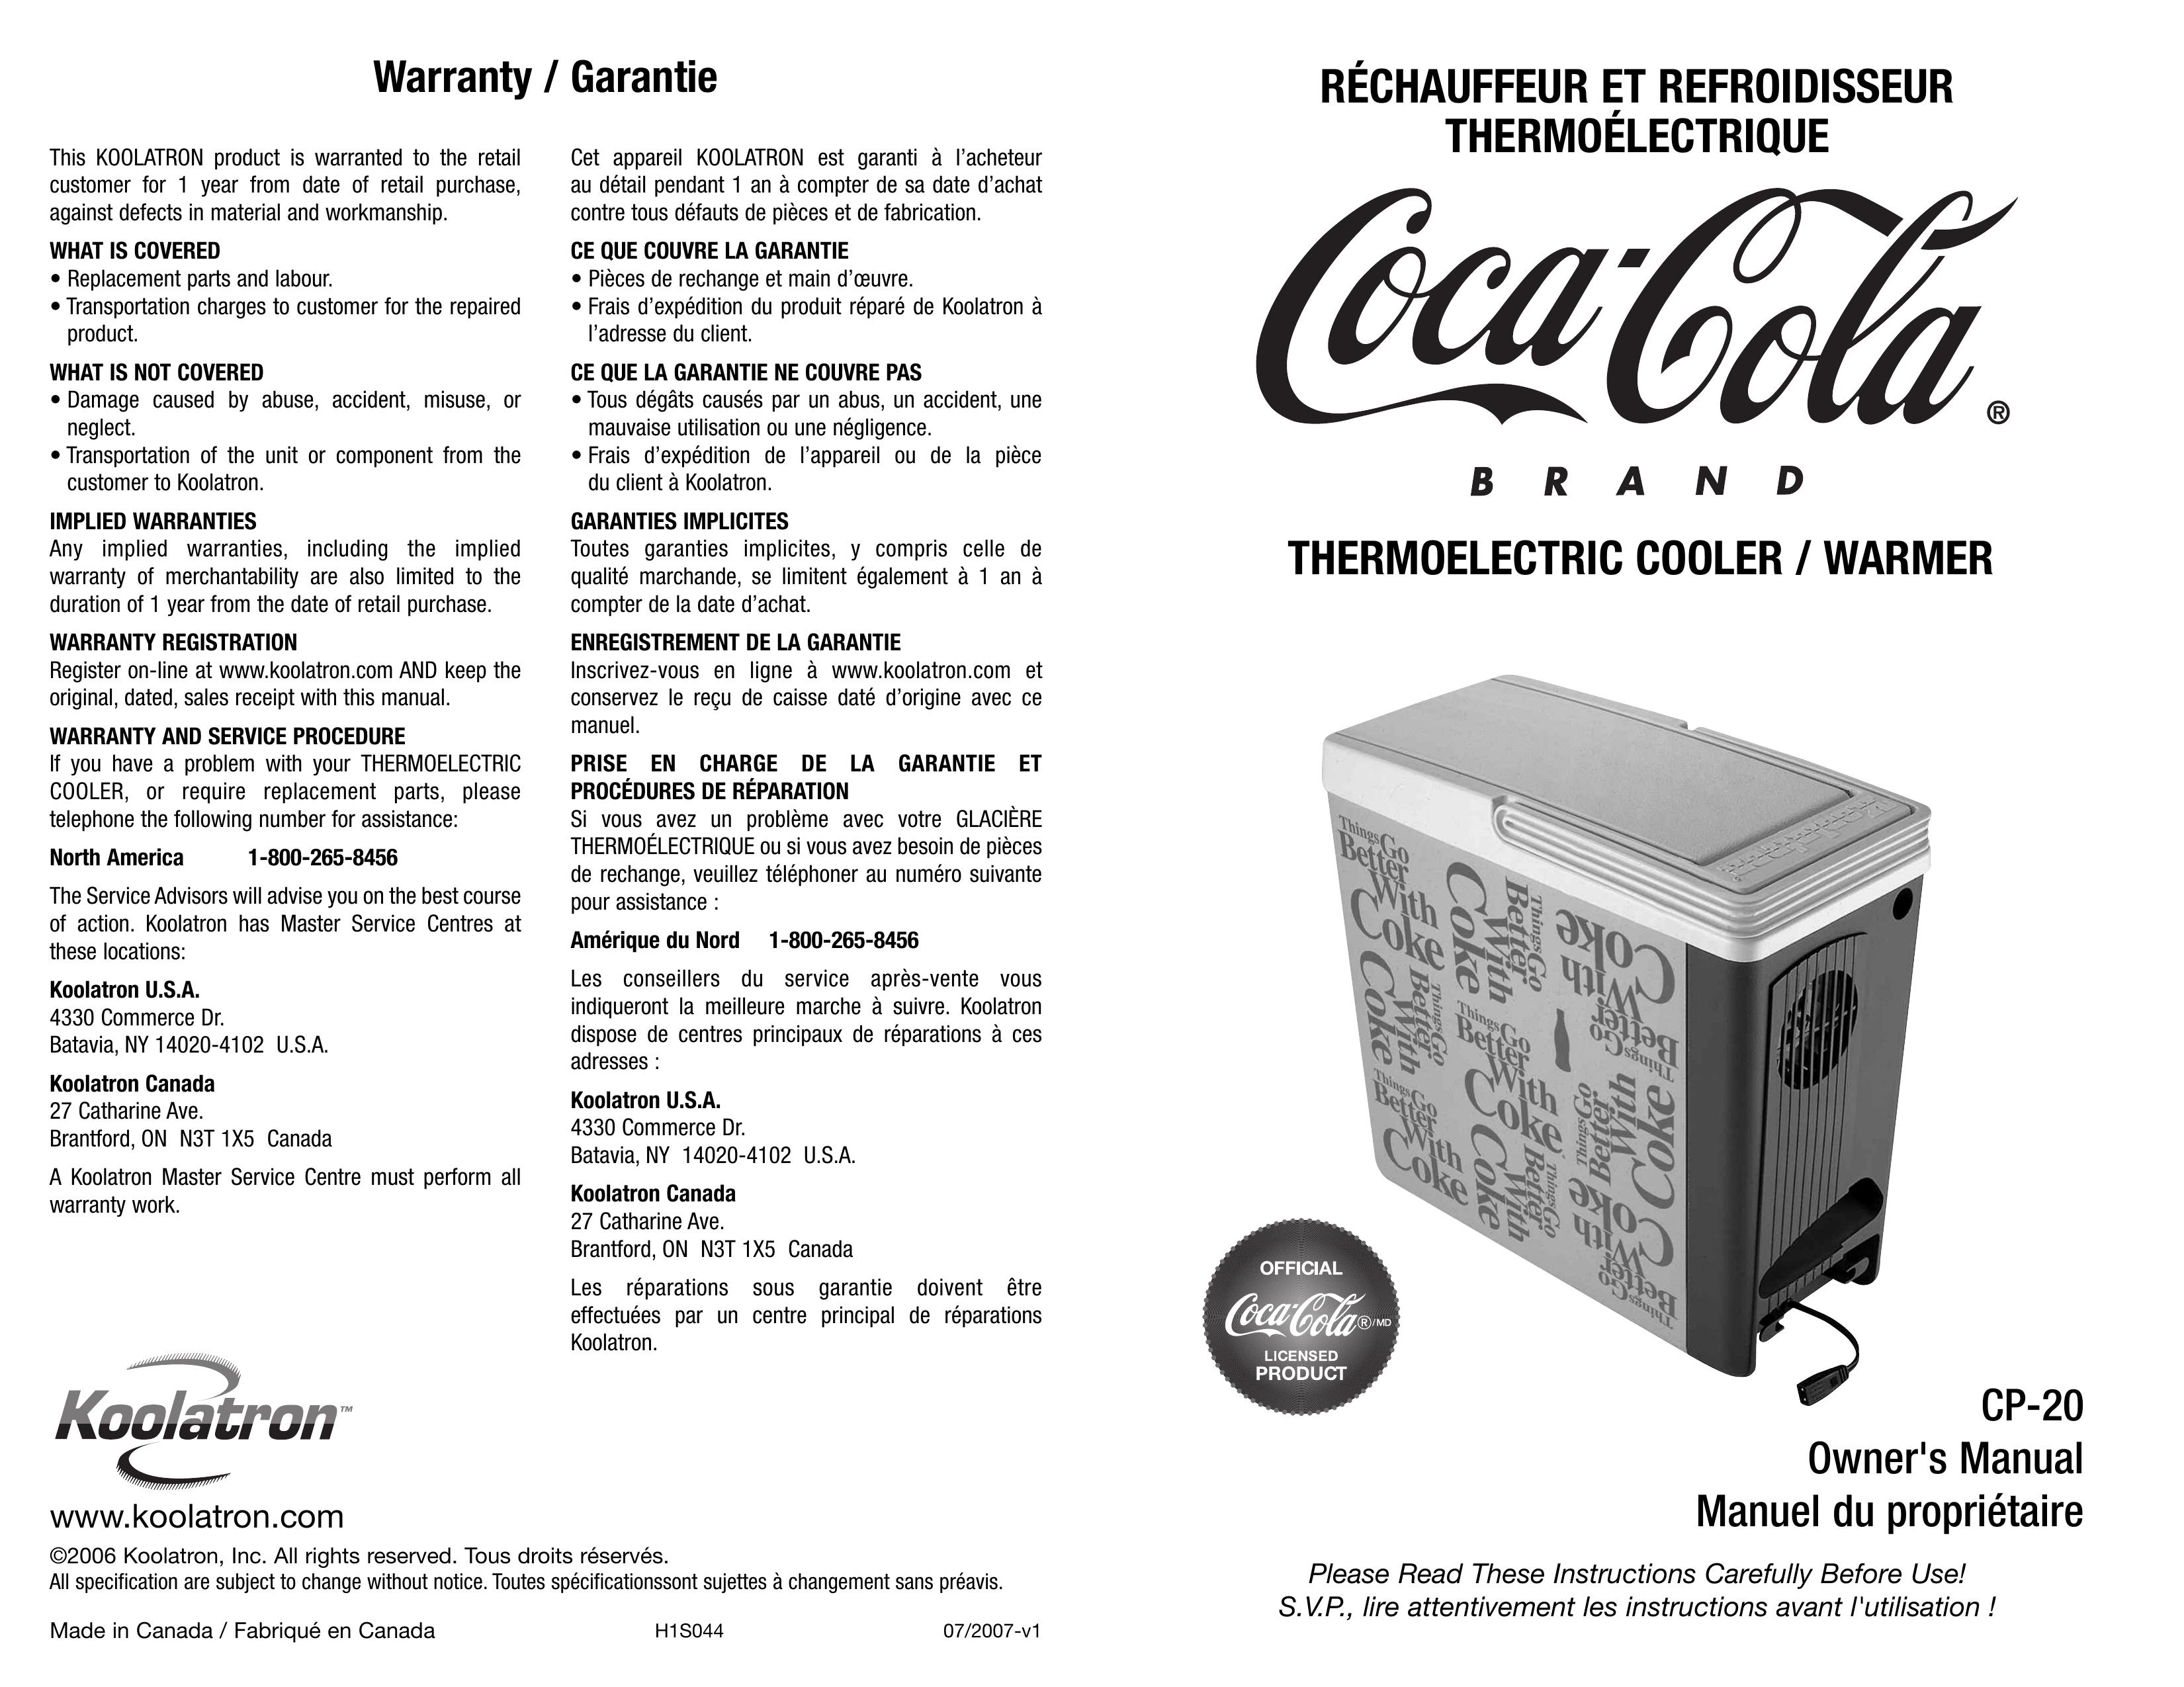 Koolatron CP-20 Refrigerator User Manual